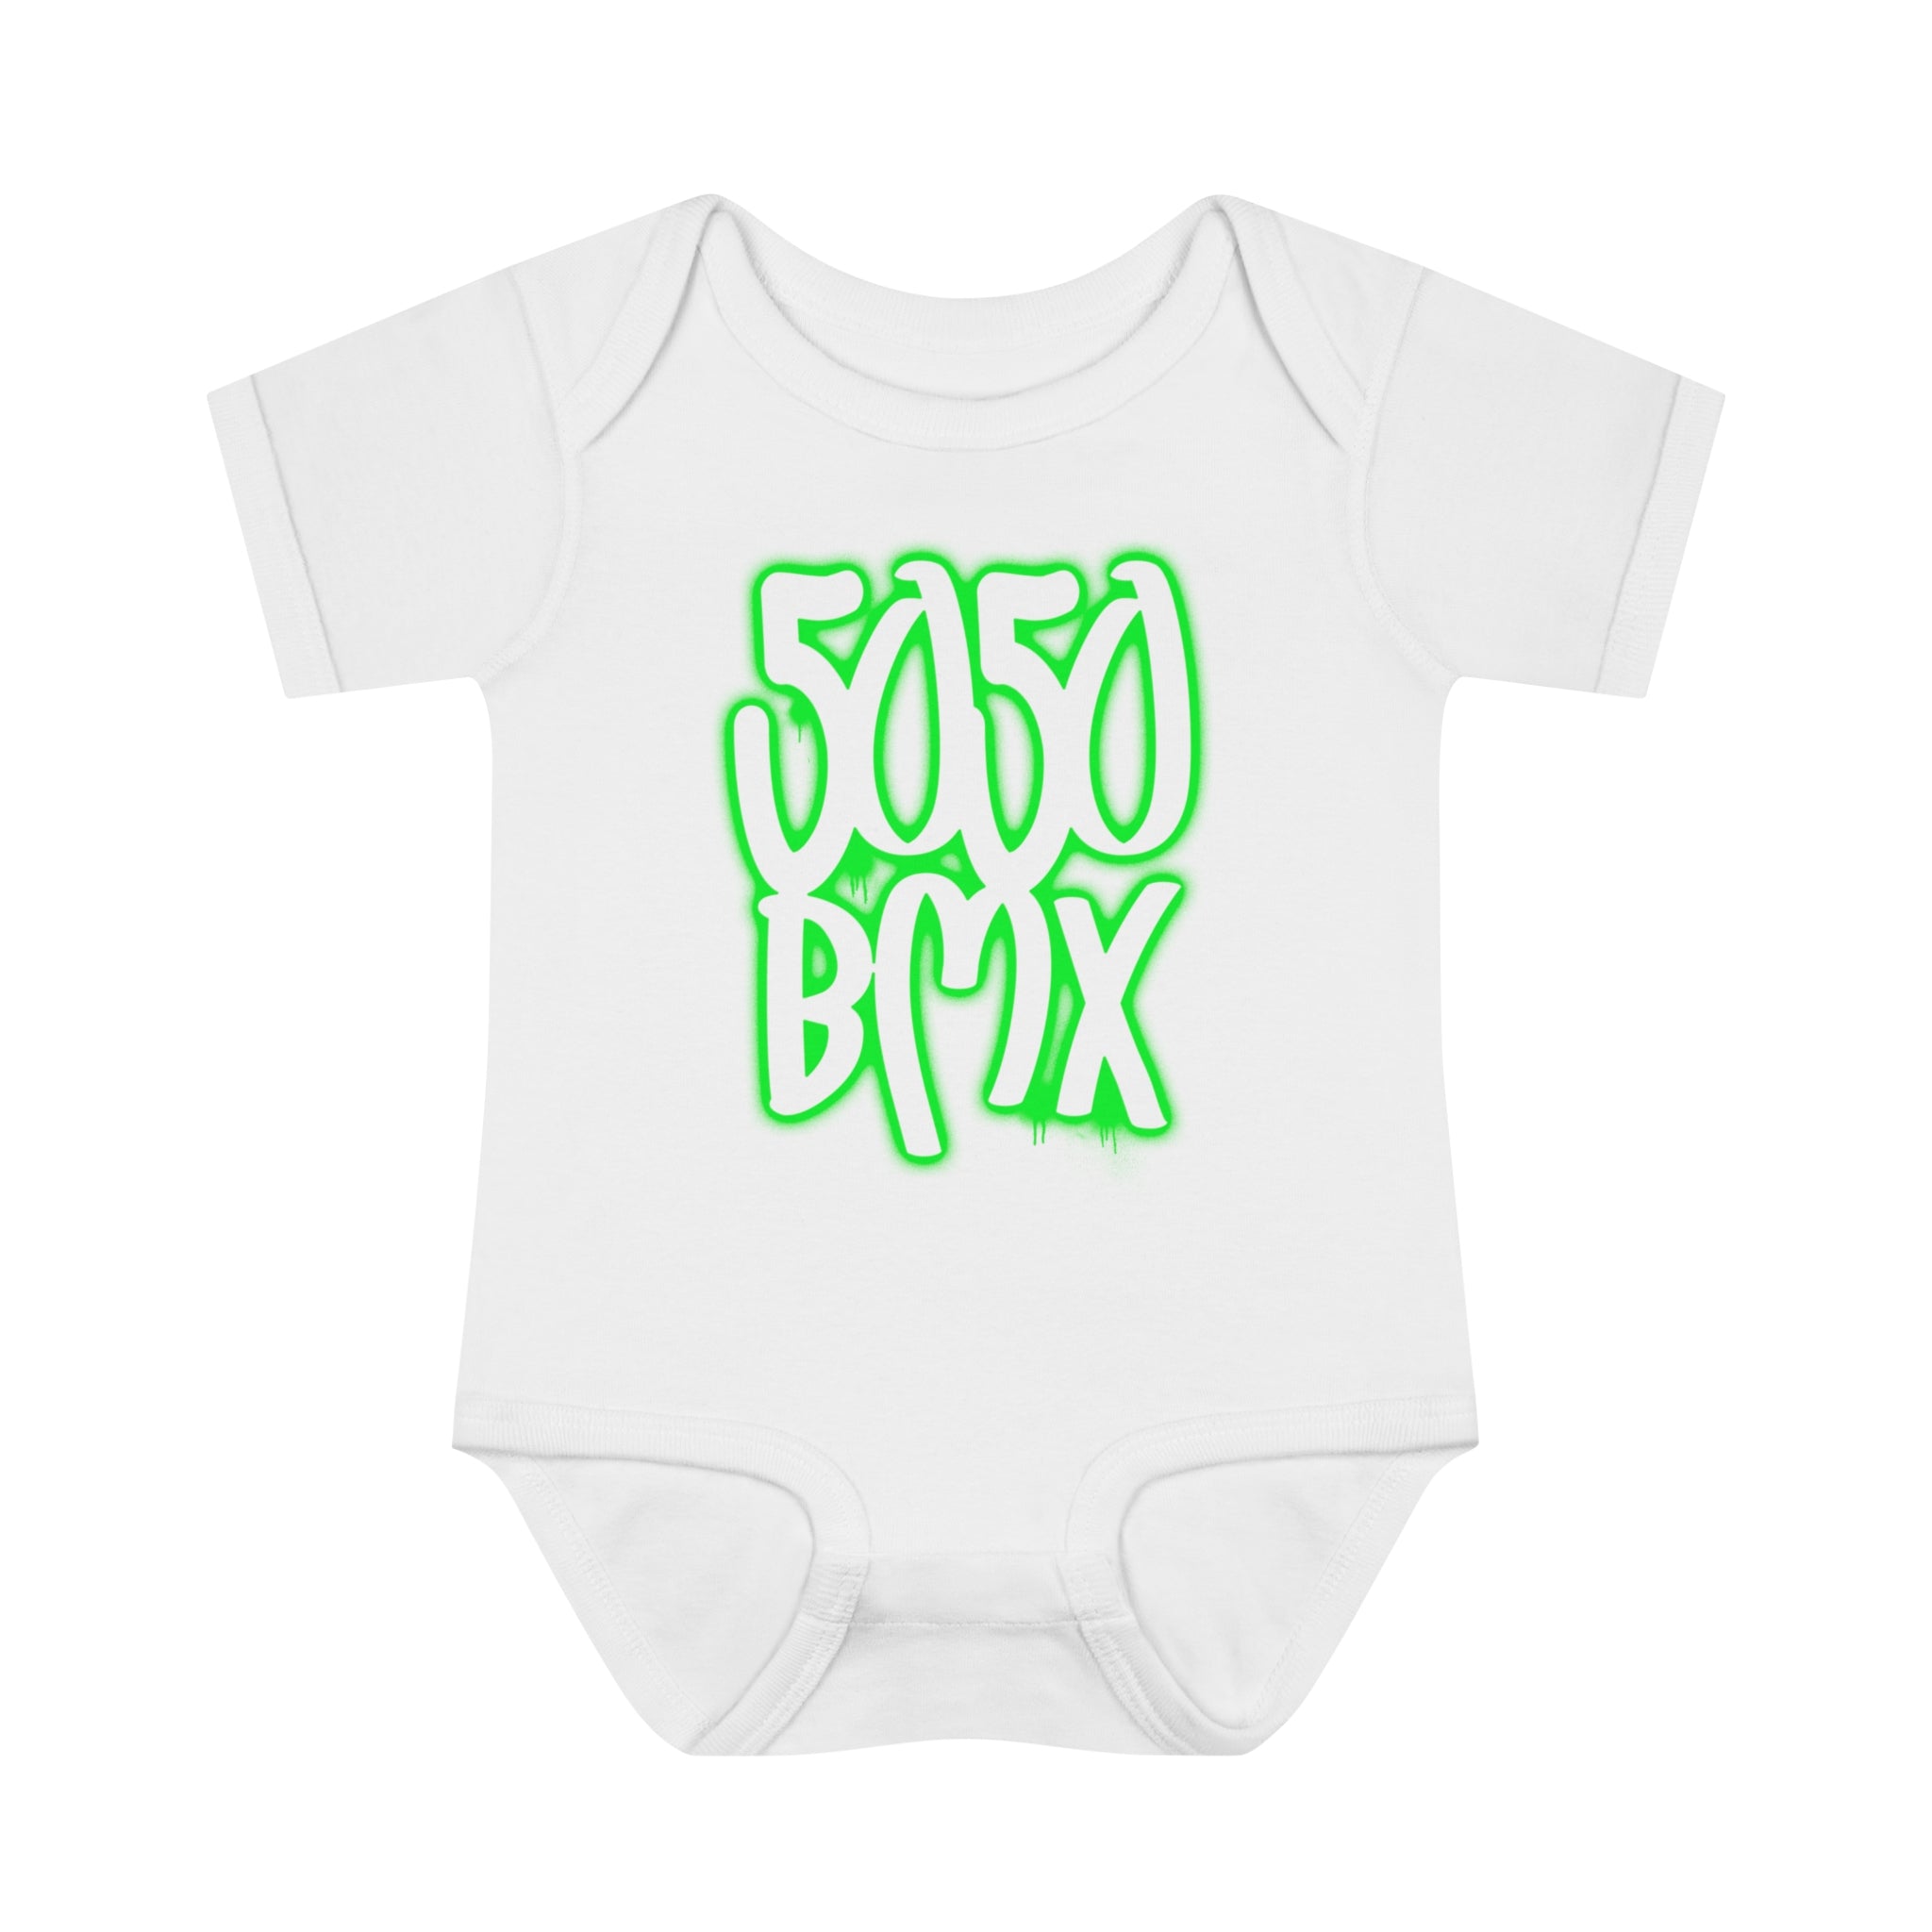 5050bmx Graffiti Infant Baby Onesie (Green)